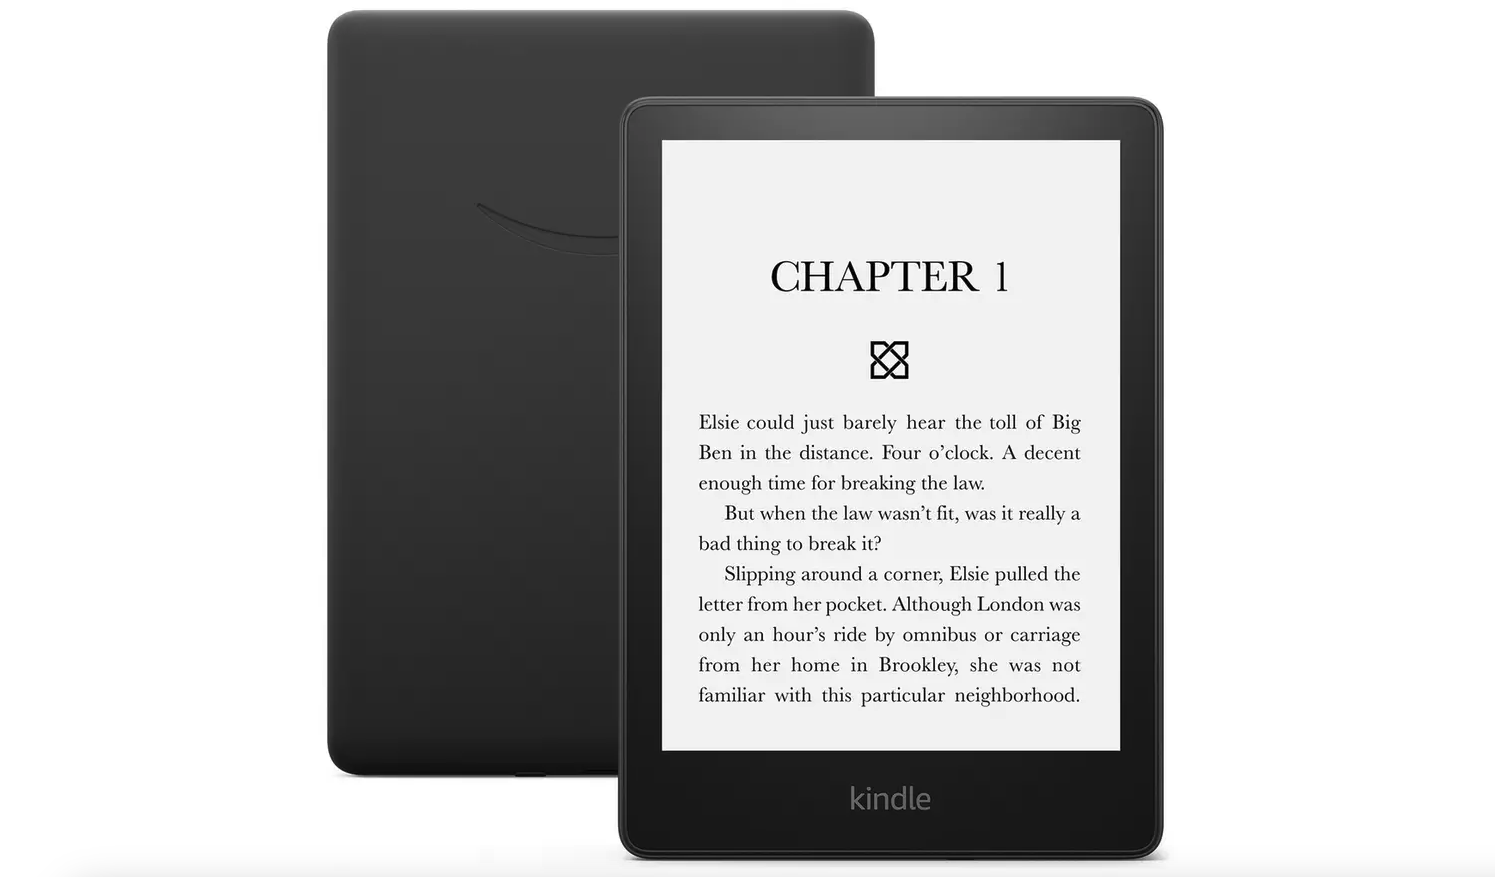 Amazon Kindle Paperwhite 16GB